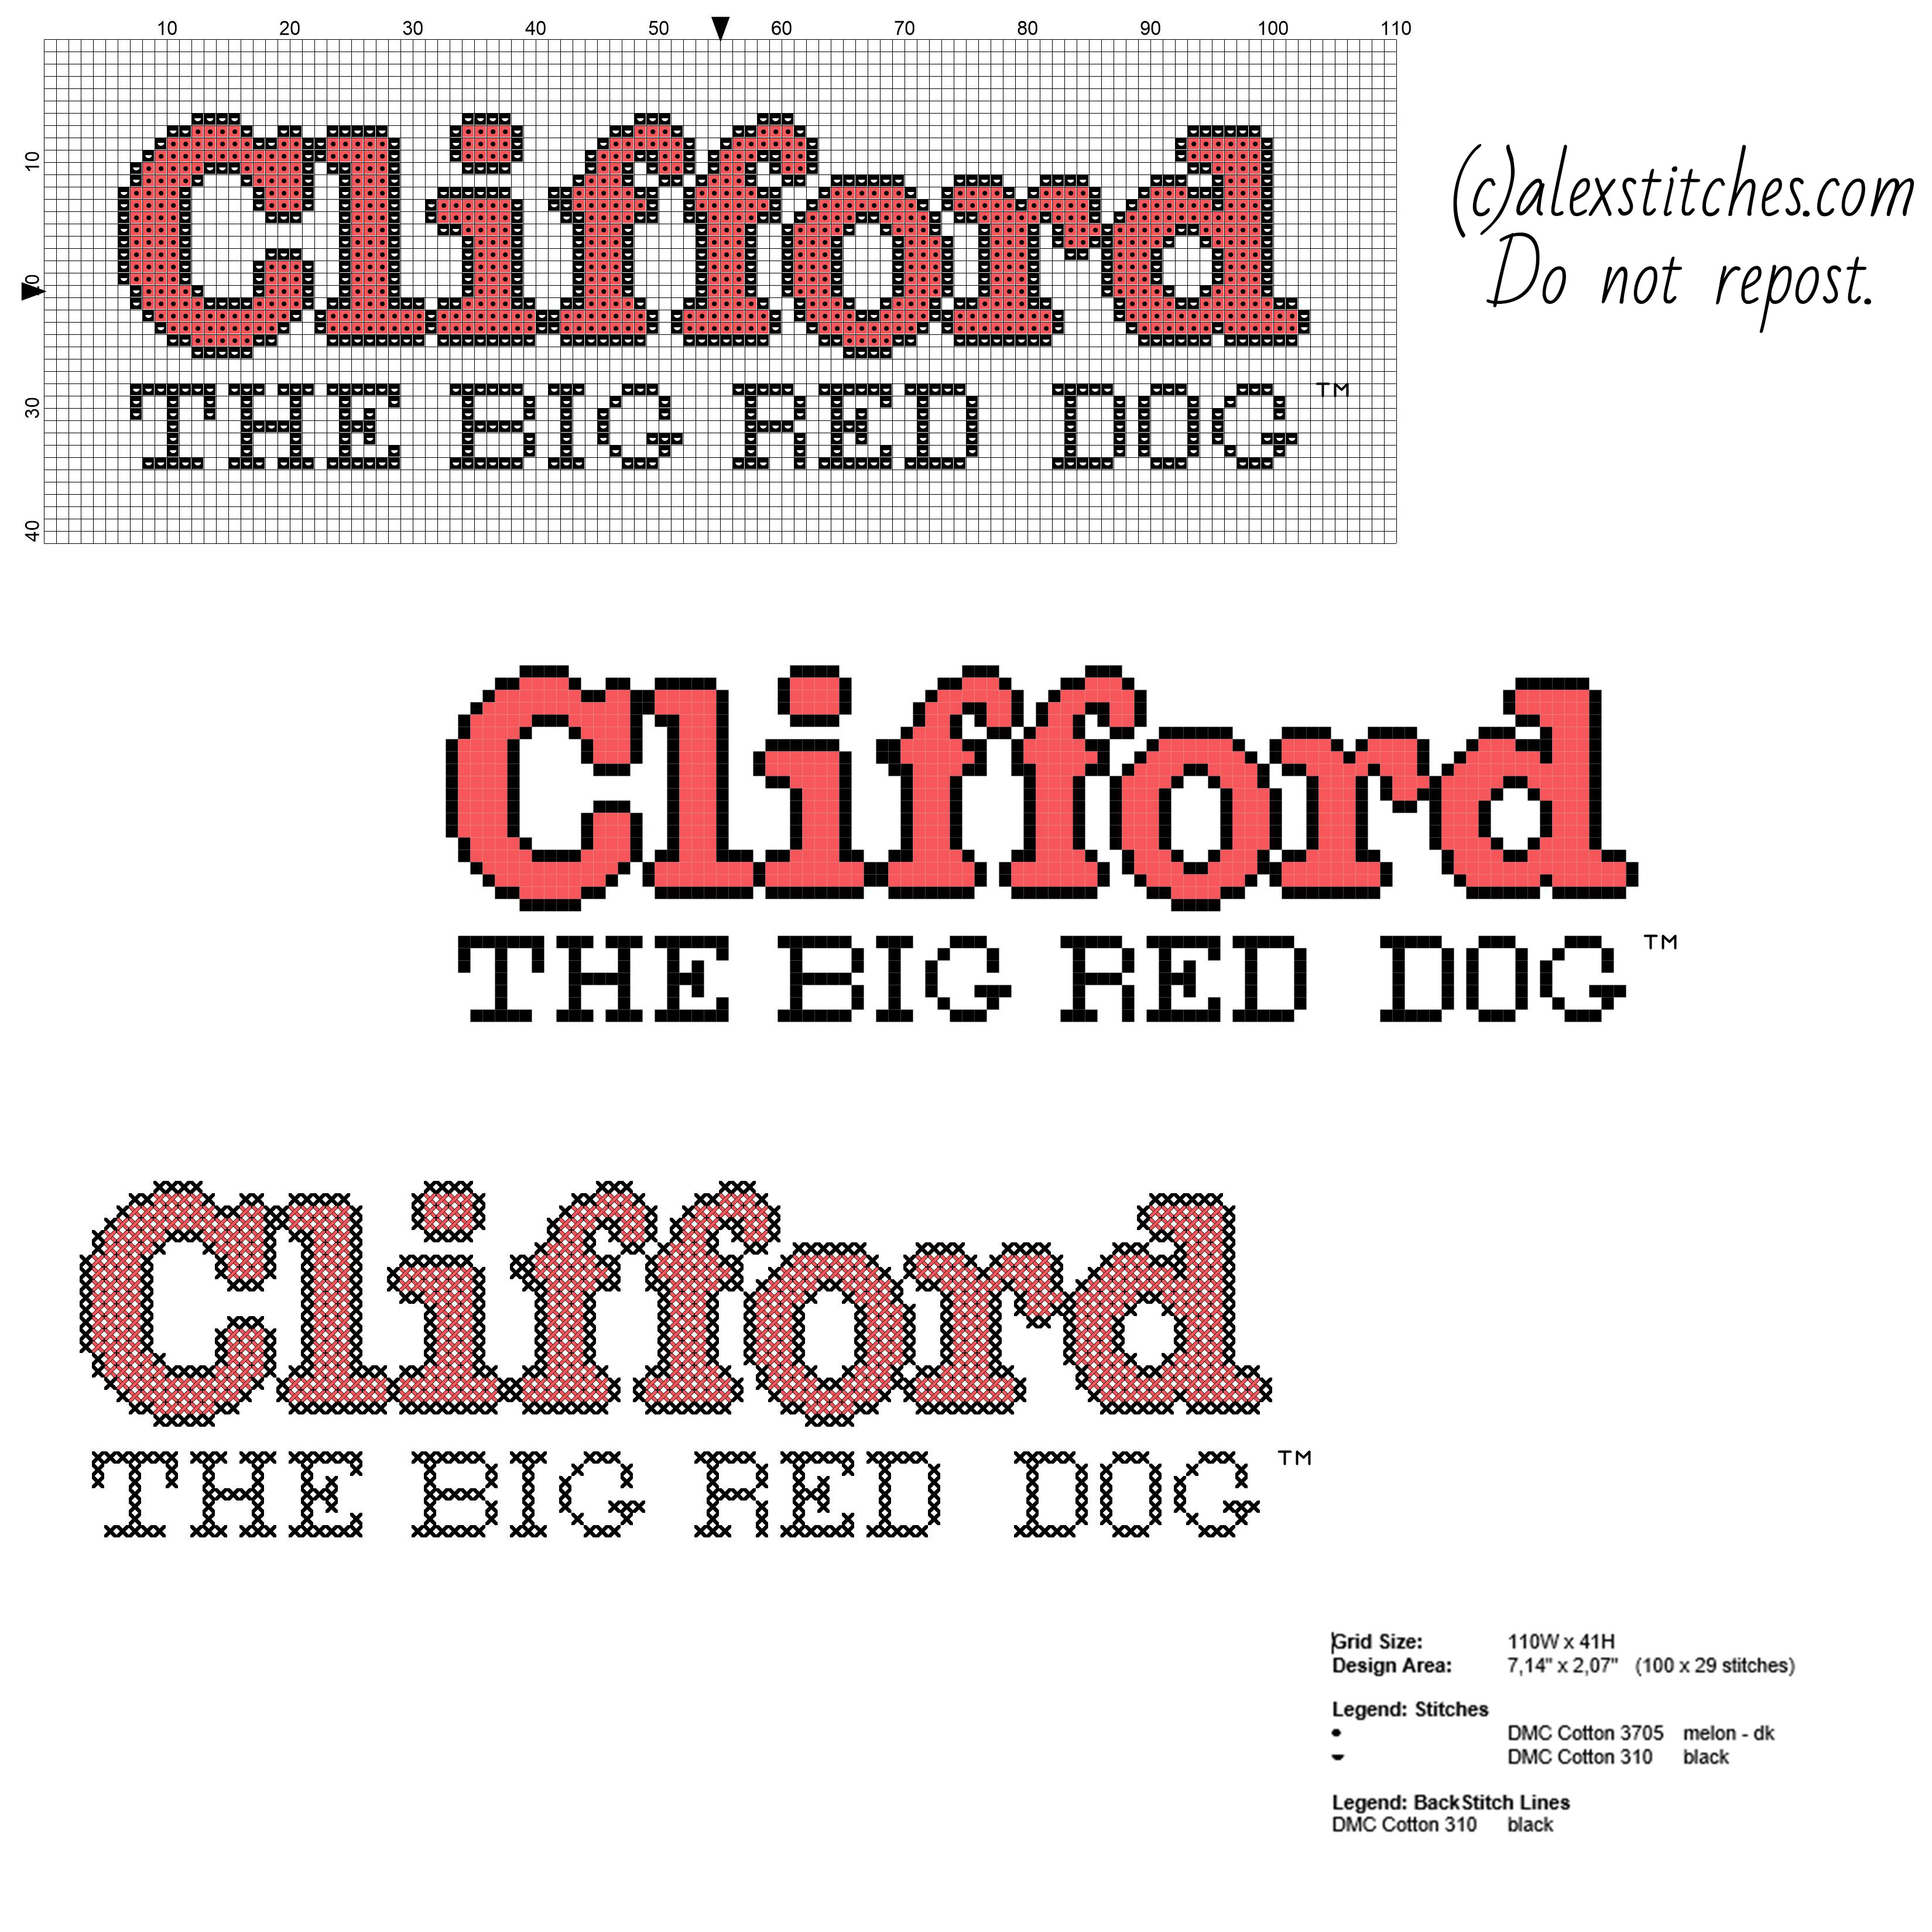 Clifford the big red dog cartoon logo free cross stitch pattern